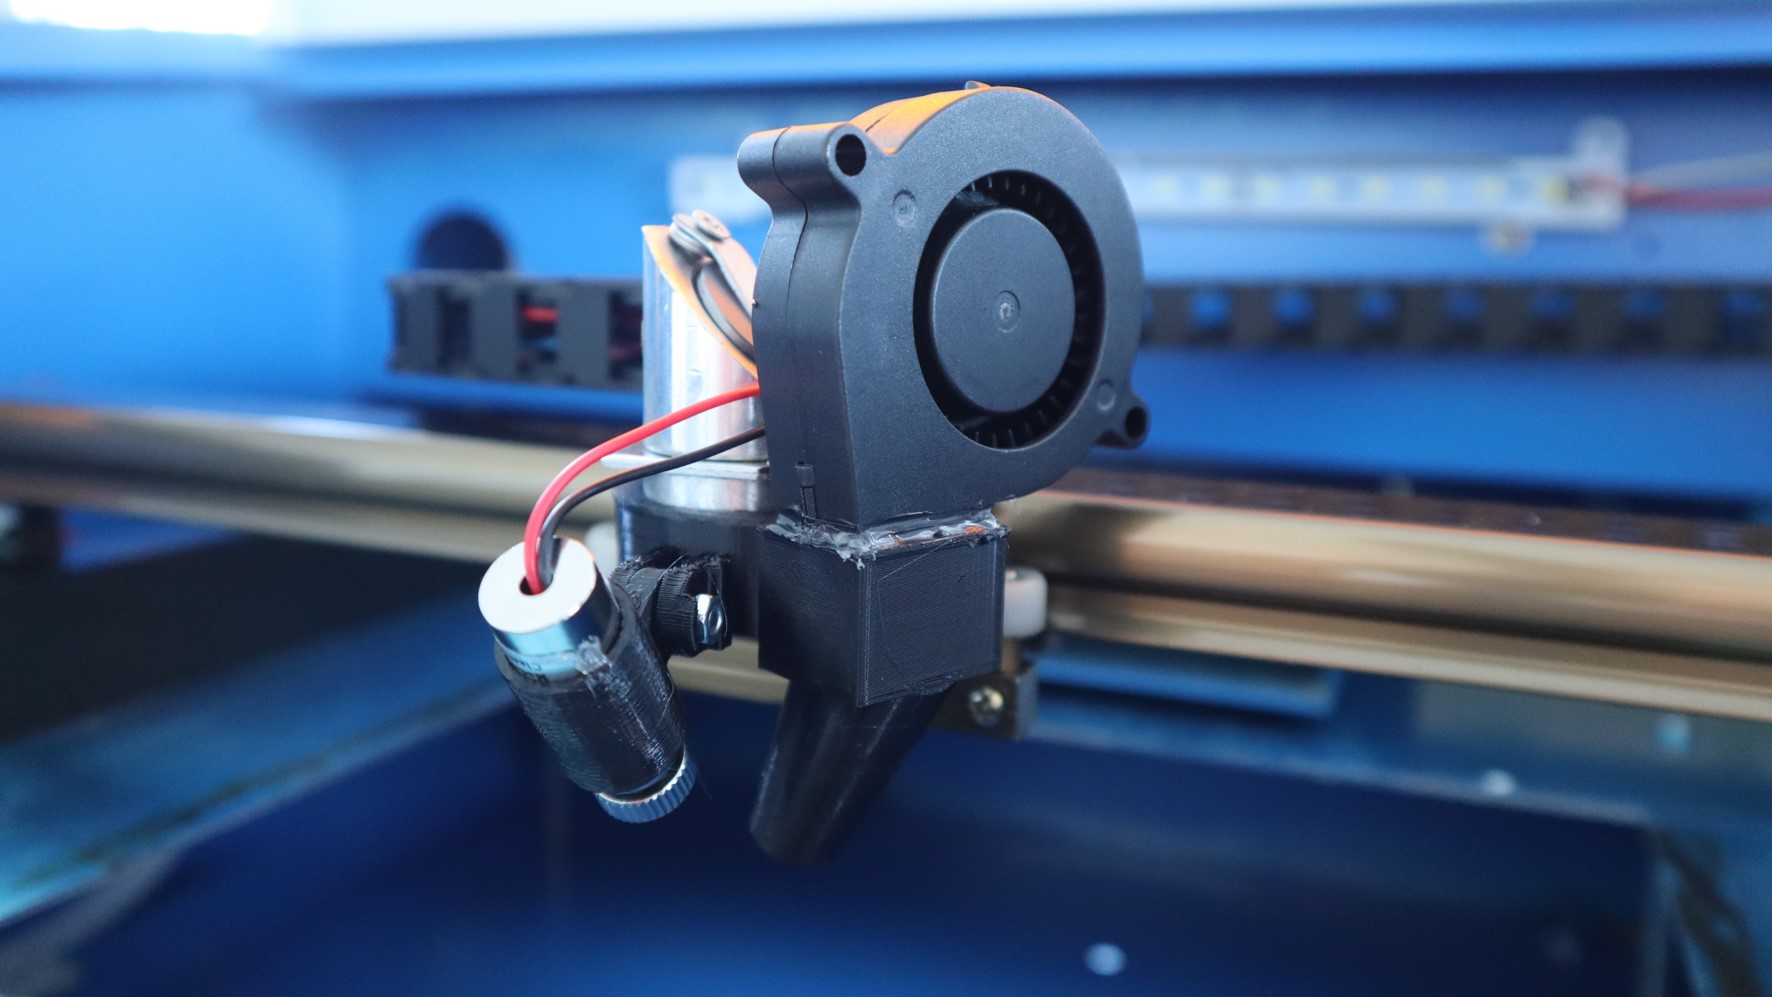 Aquarium air pump for air assist laser engraving - is it better